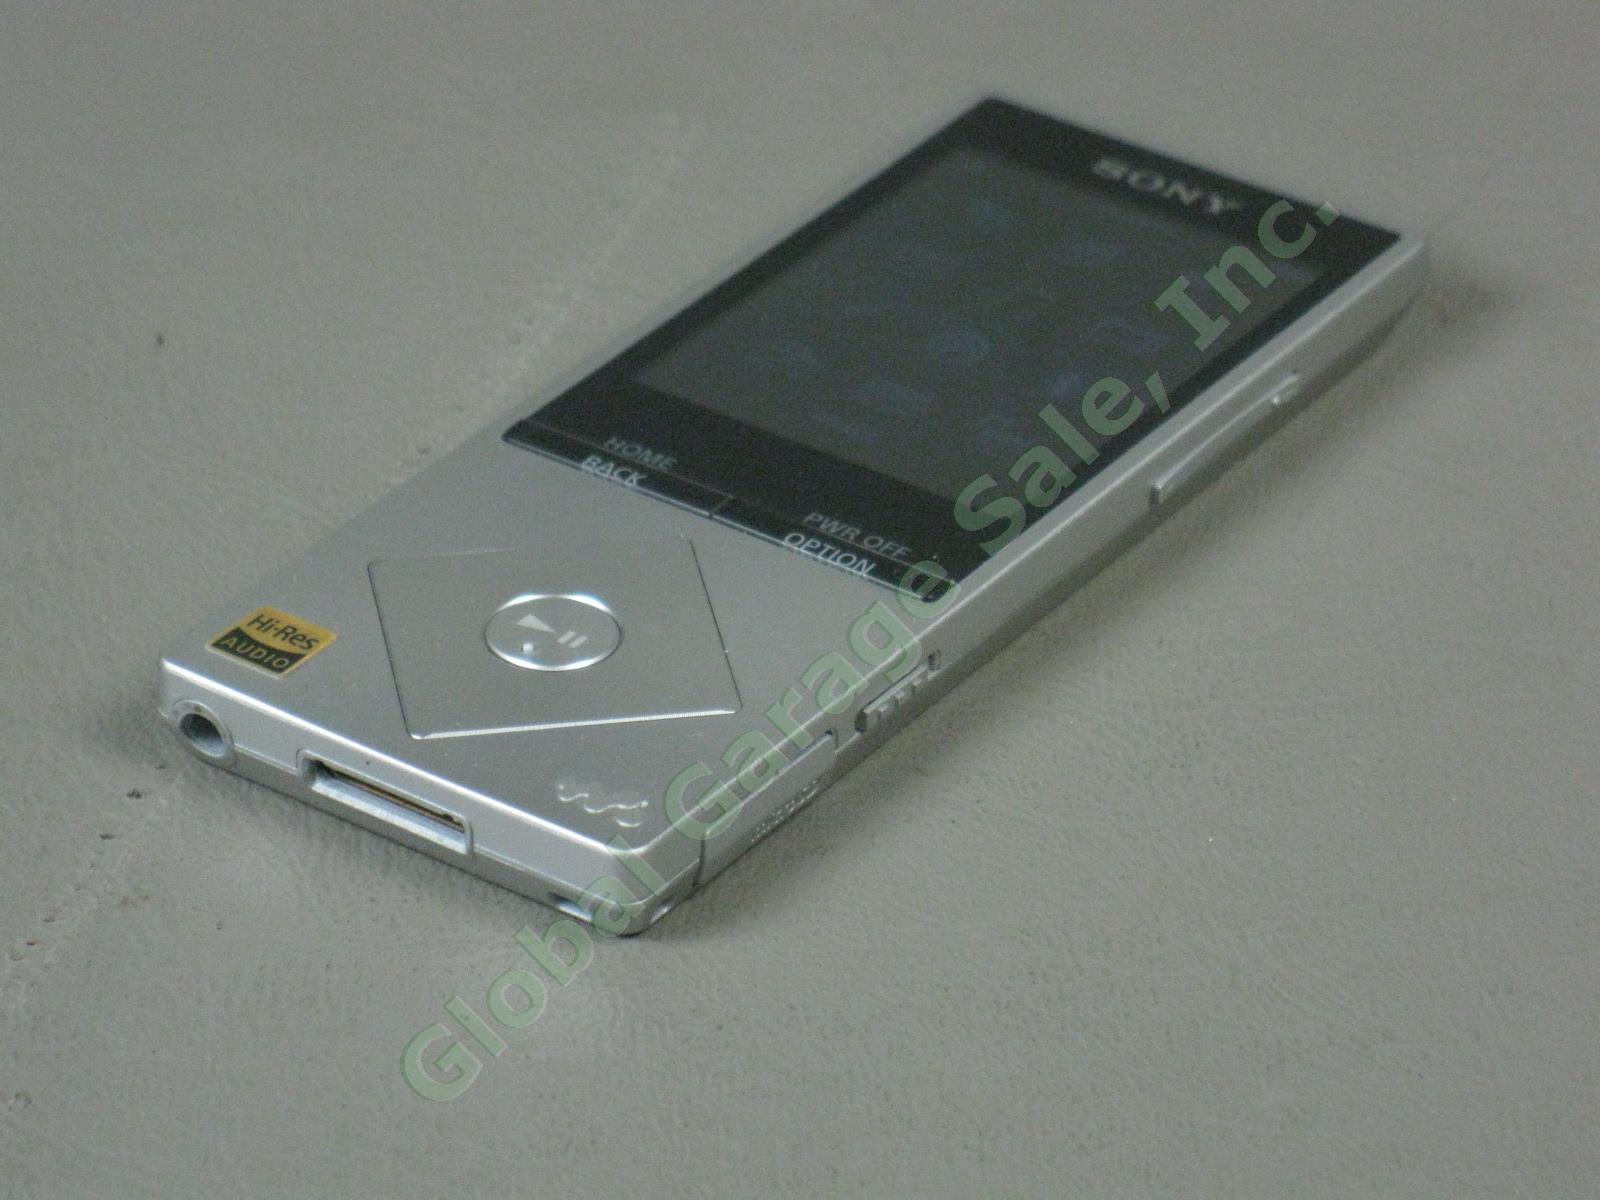 Sony Walkman NWZ-A17 64GB Hi-Res Silver Digital Media Music Player No Reserve!! 3